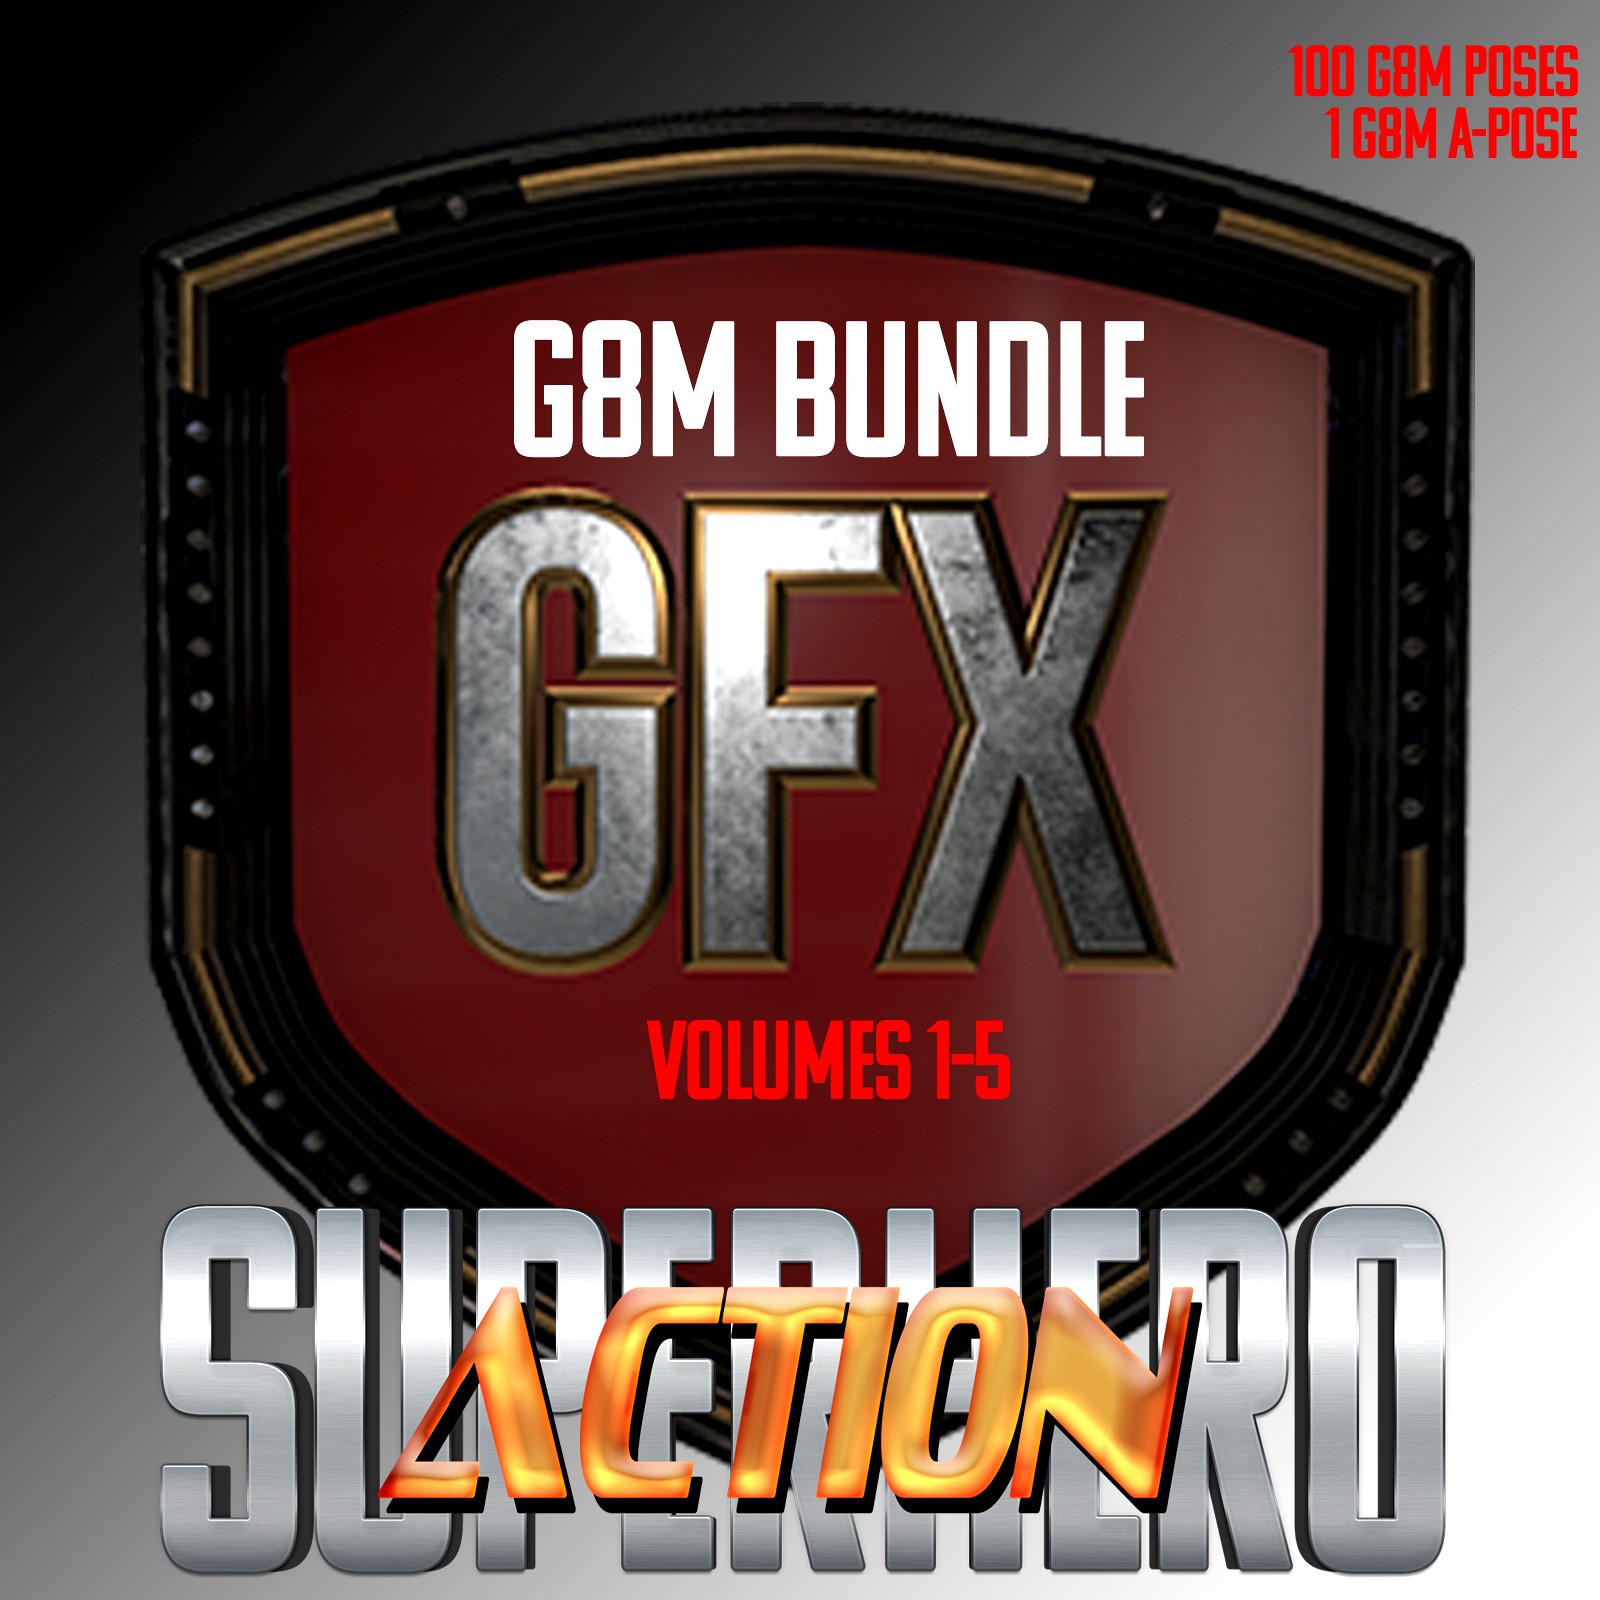 SuperHero Action Bundle for G8M